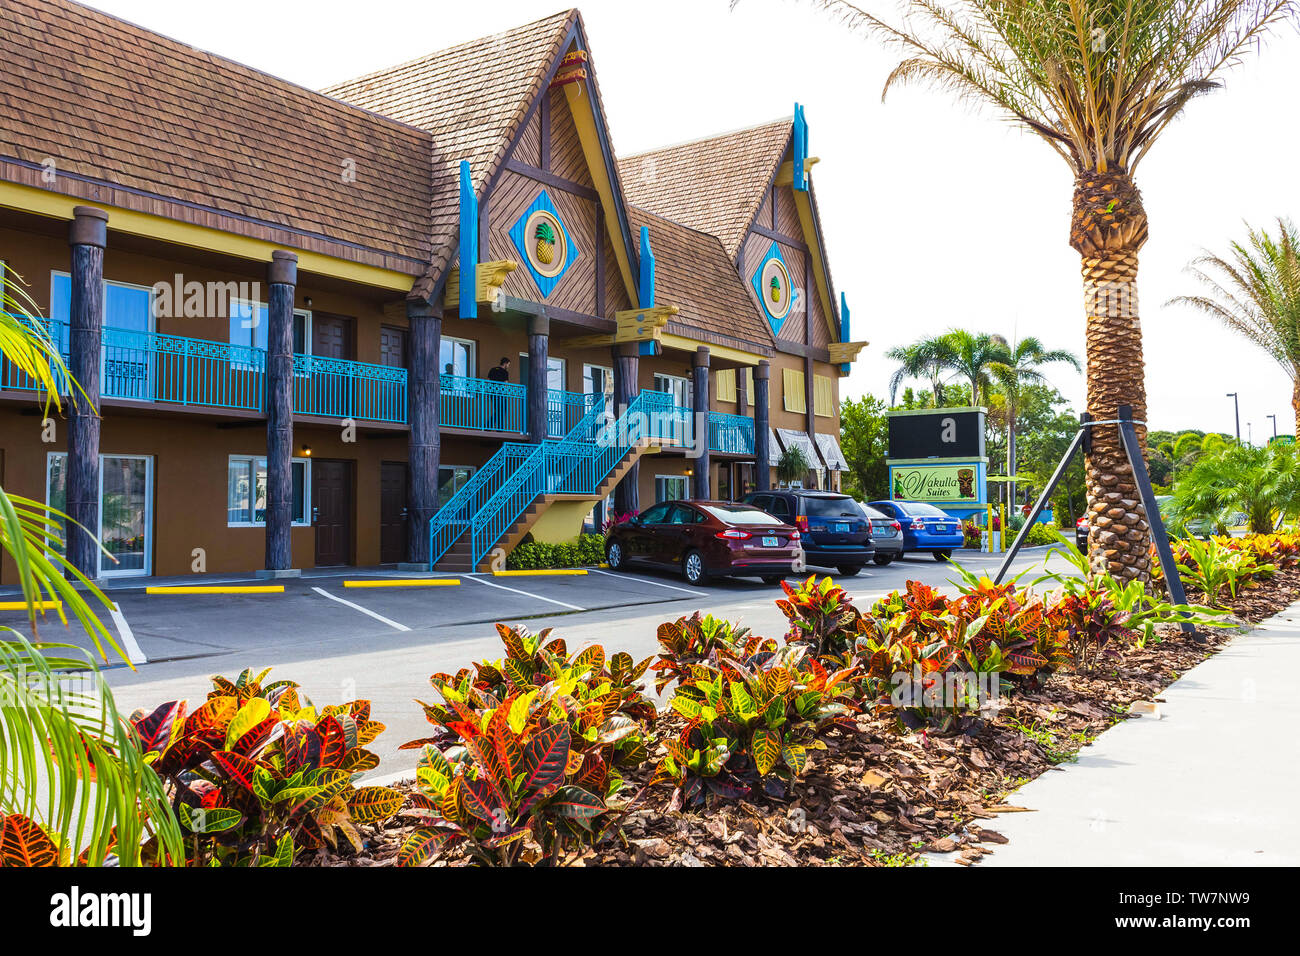 Cocoa beach, Florida, USA - April 29, 2018: The Vakulla suites beach hotel Stock Photo